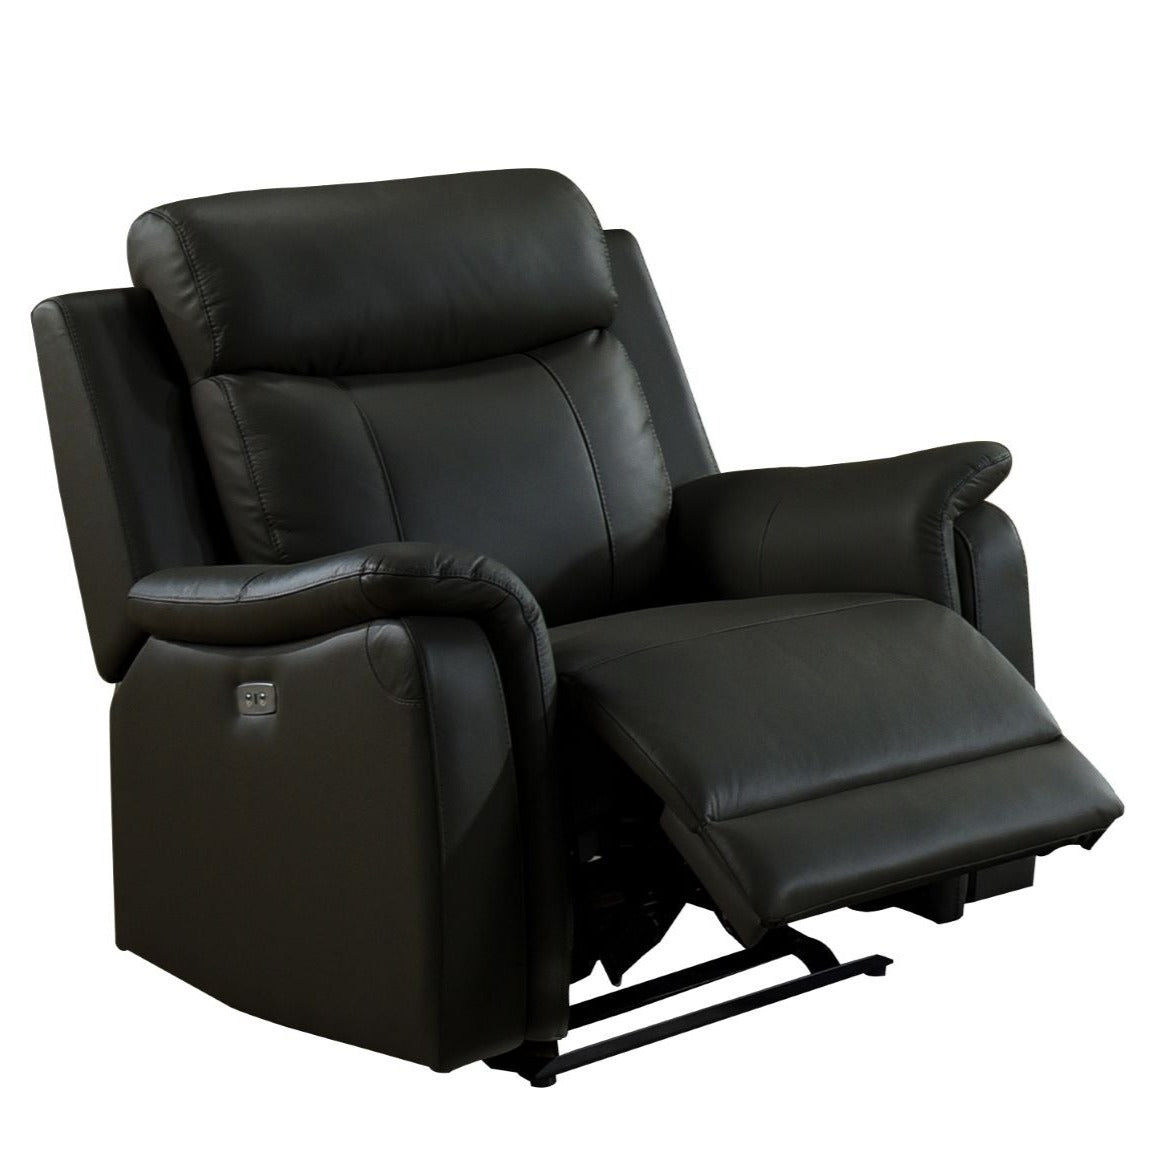 Cyrus Top Grain Leather Power Glider Recliner Chair Black 99840